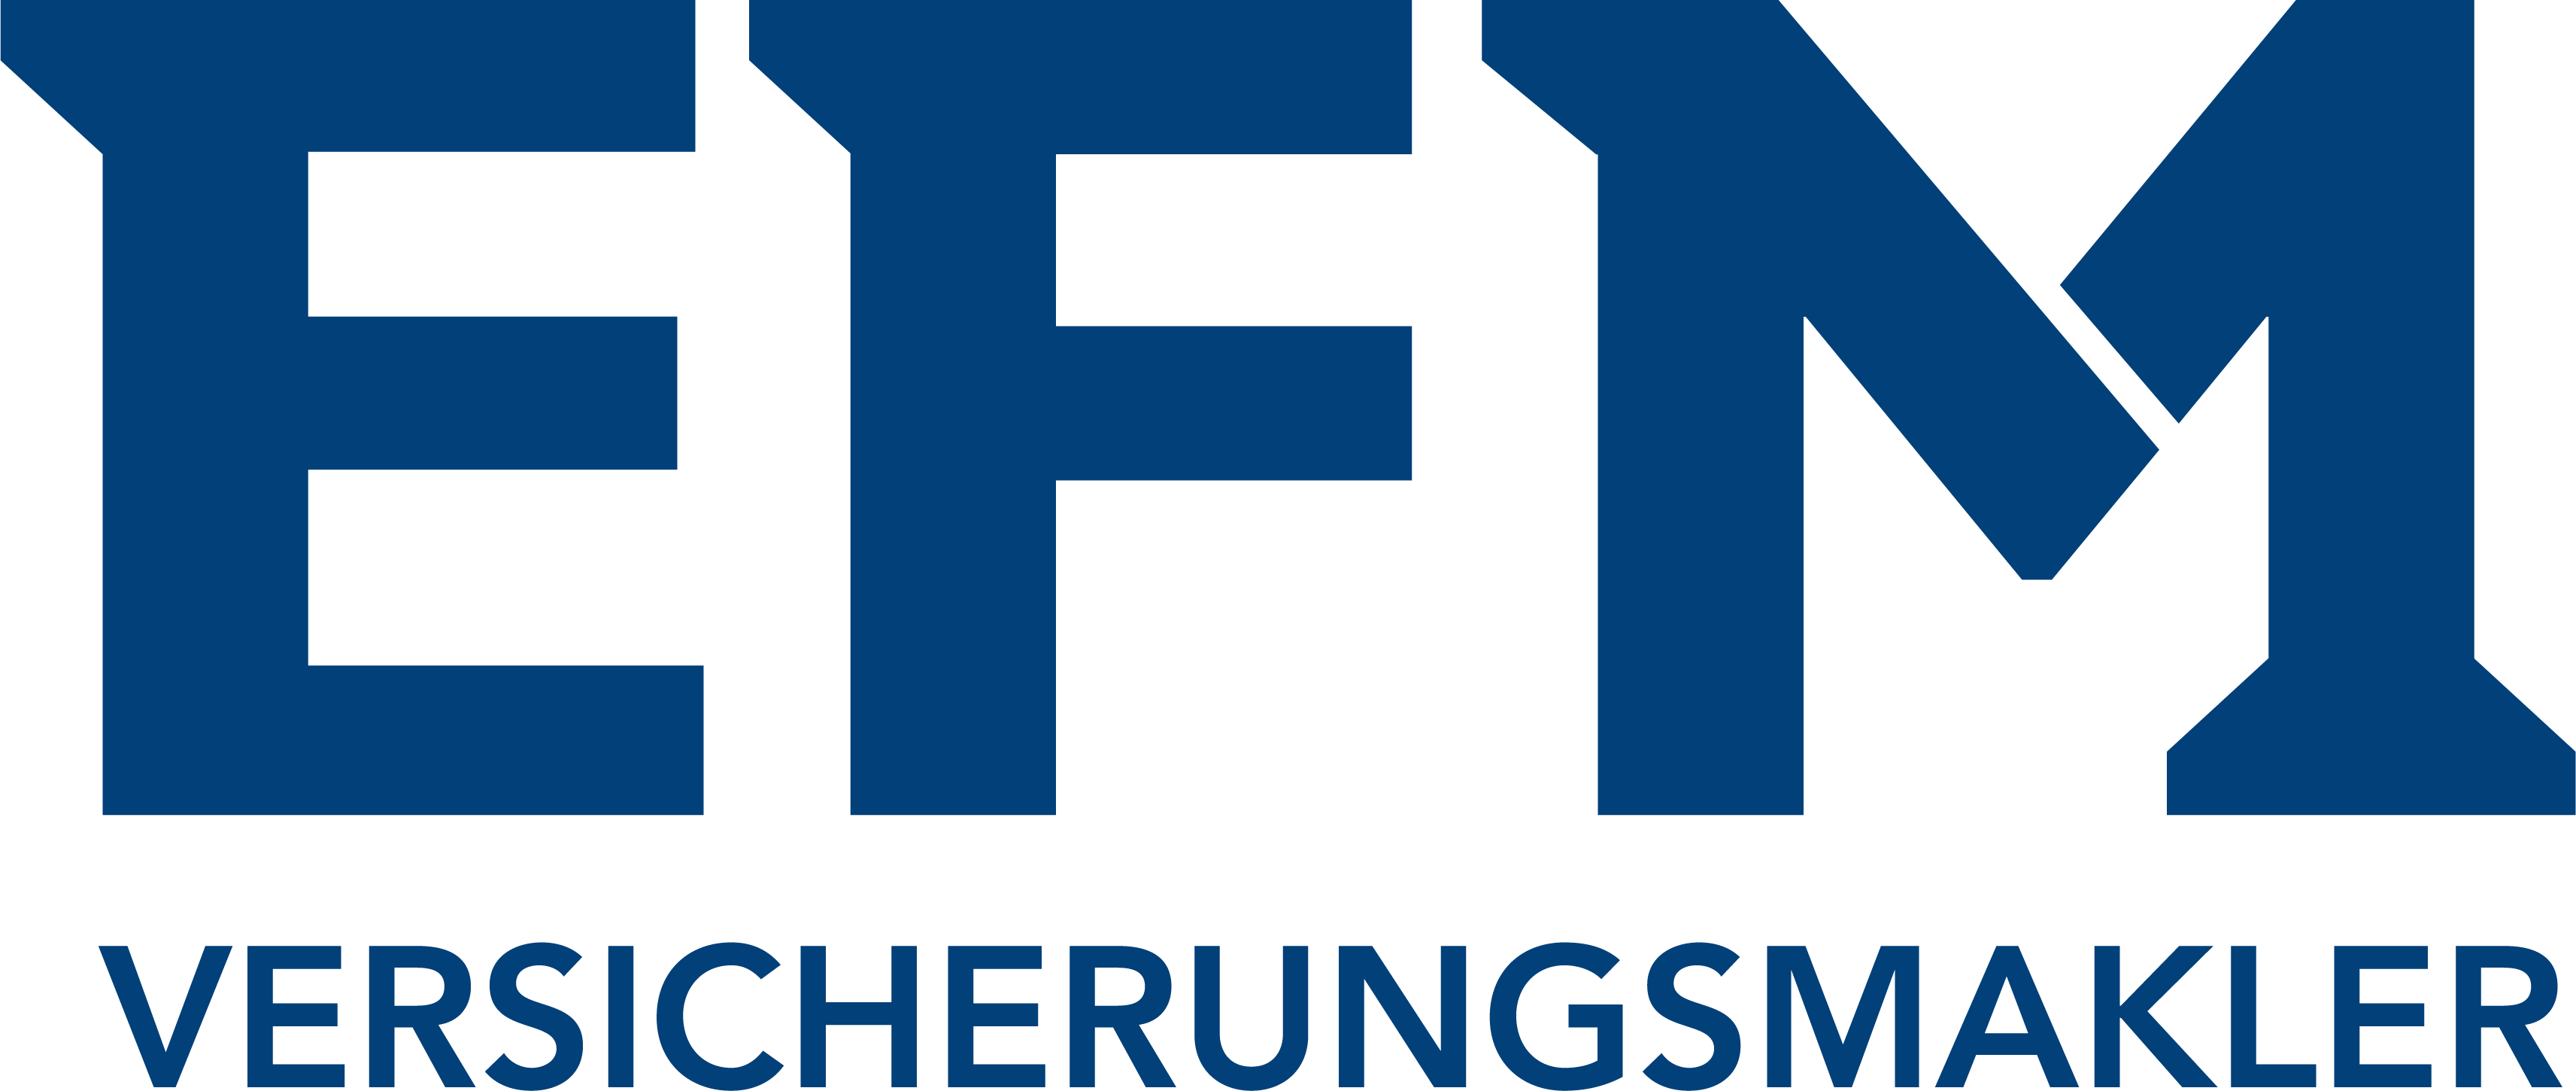 EFM Versicherungsmakler AG Teaser Logo